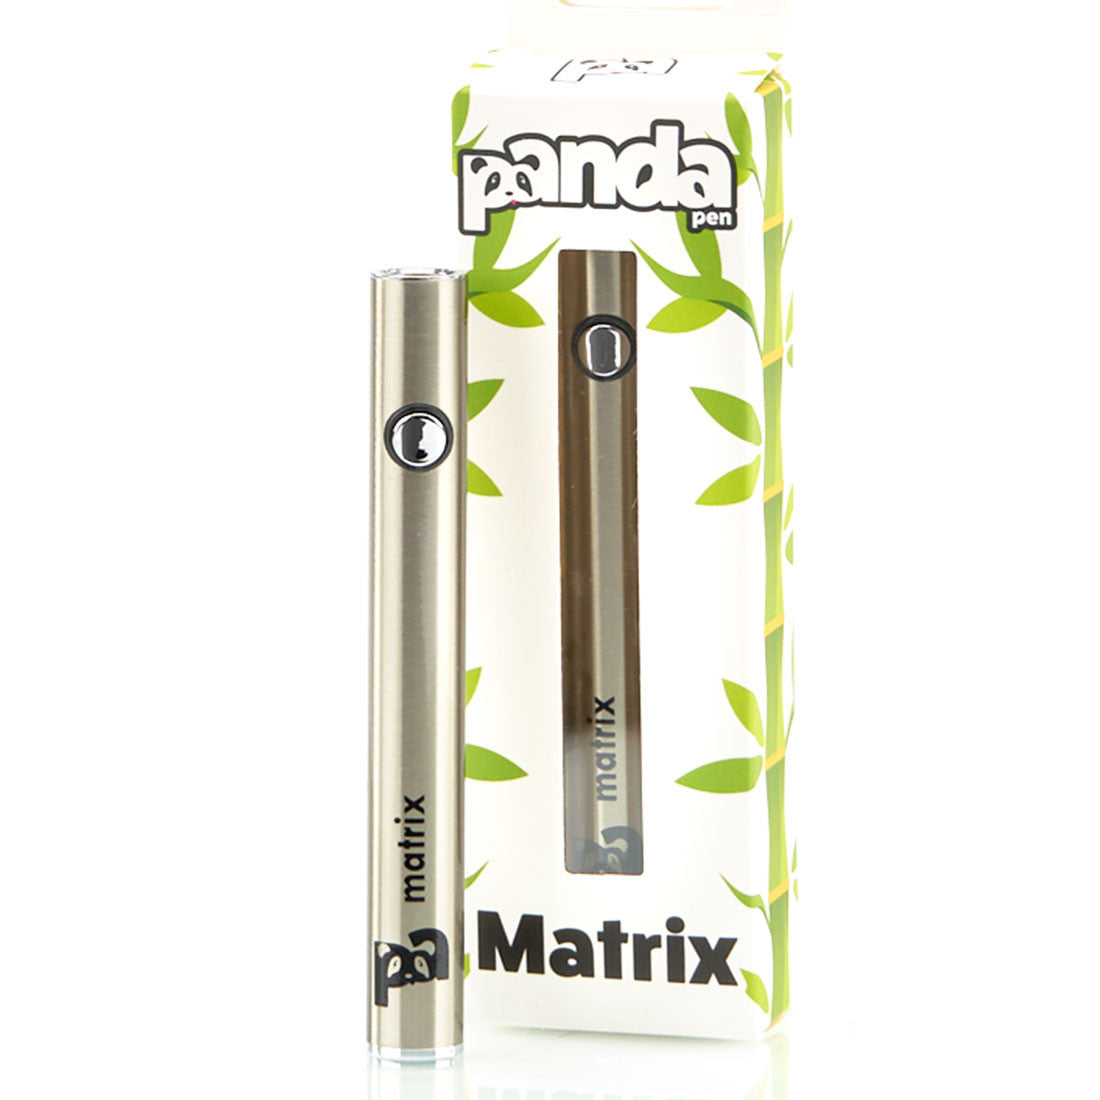 Panda Matrix Variable Voltage Cartridge Battery Pen 510 Thread